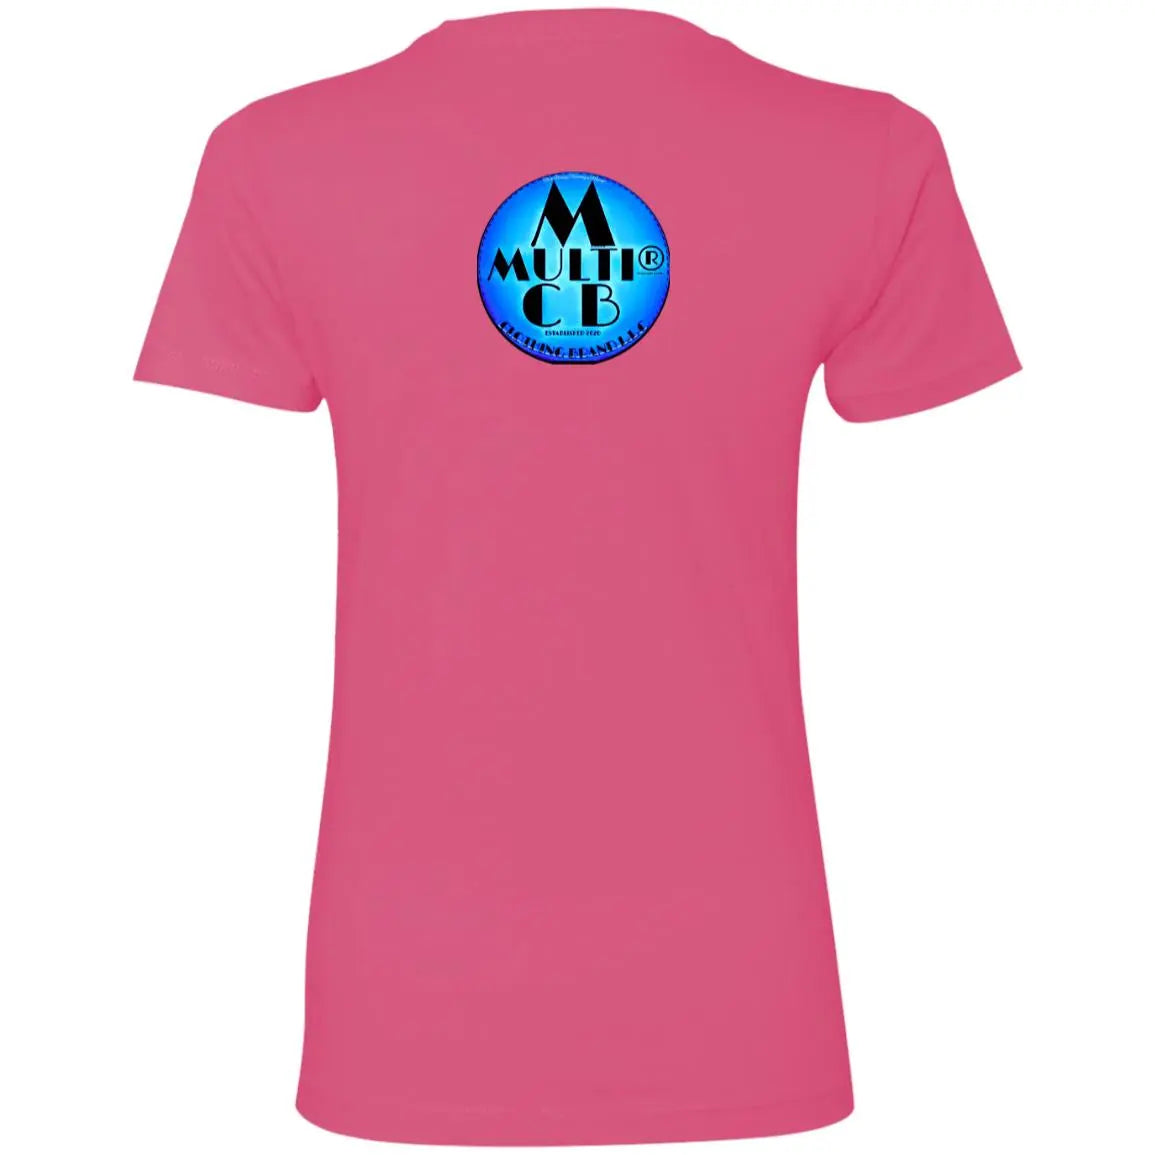 Multi - Prosper On Purpose - Women's NL3900 Ladies' Boyfriend T-Shirt CustomCat